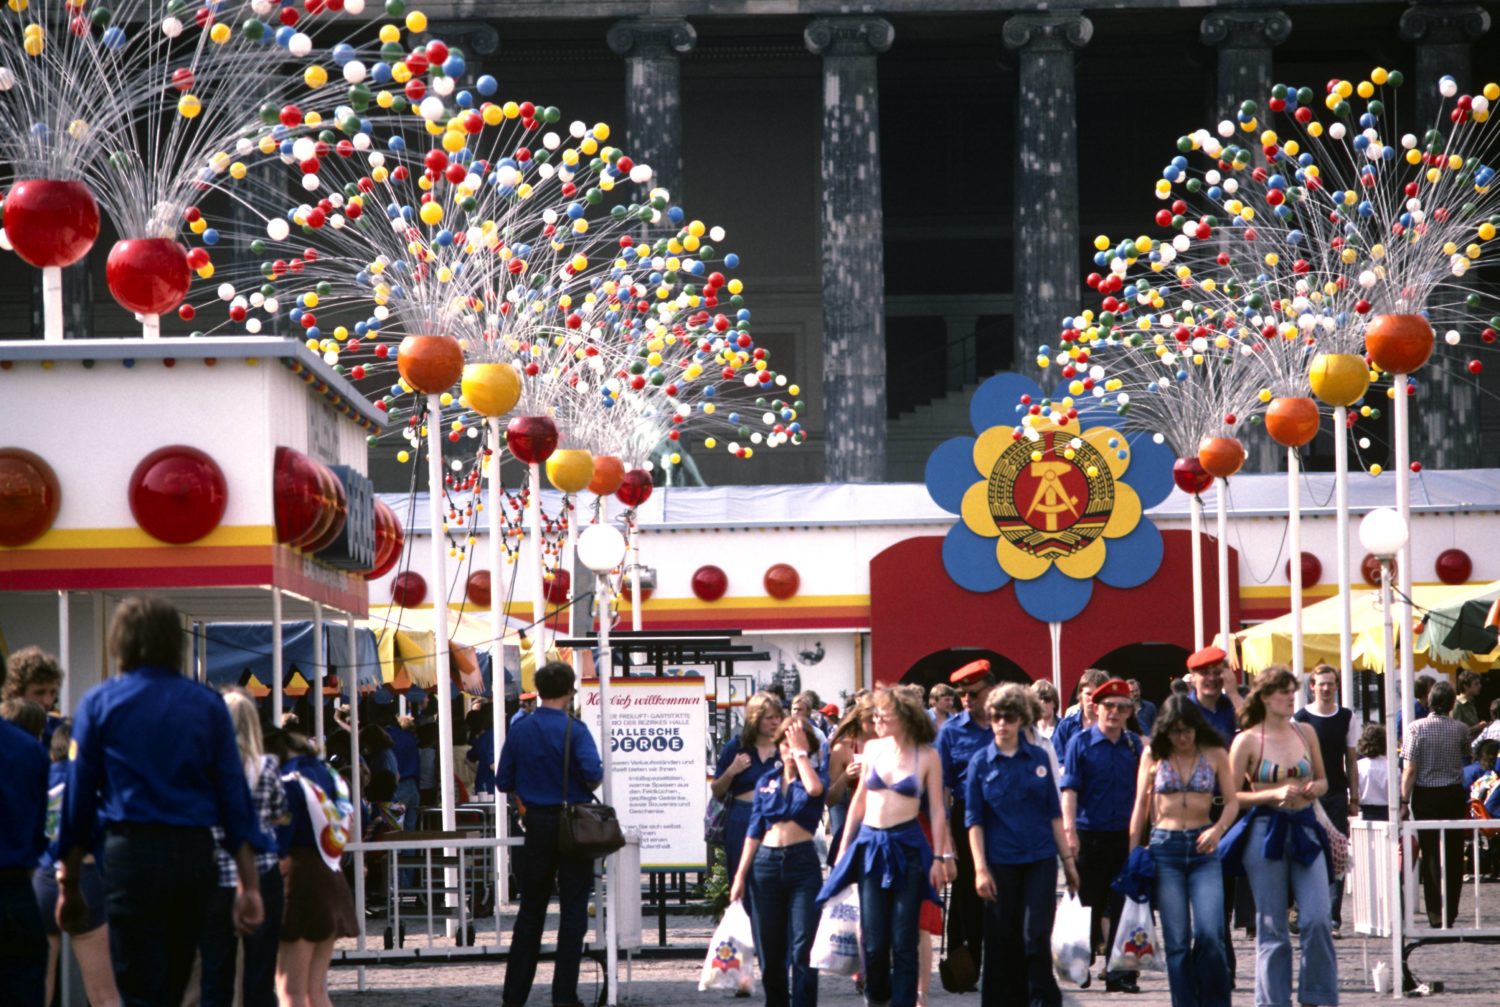 Nationales Jugendfestival in Ost-Berlin im Juni 1979. Foto: Imago/SMID